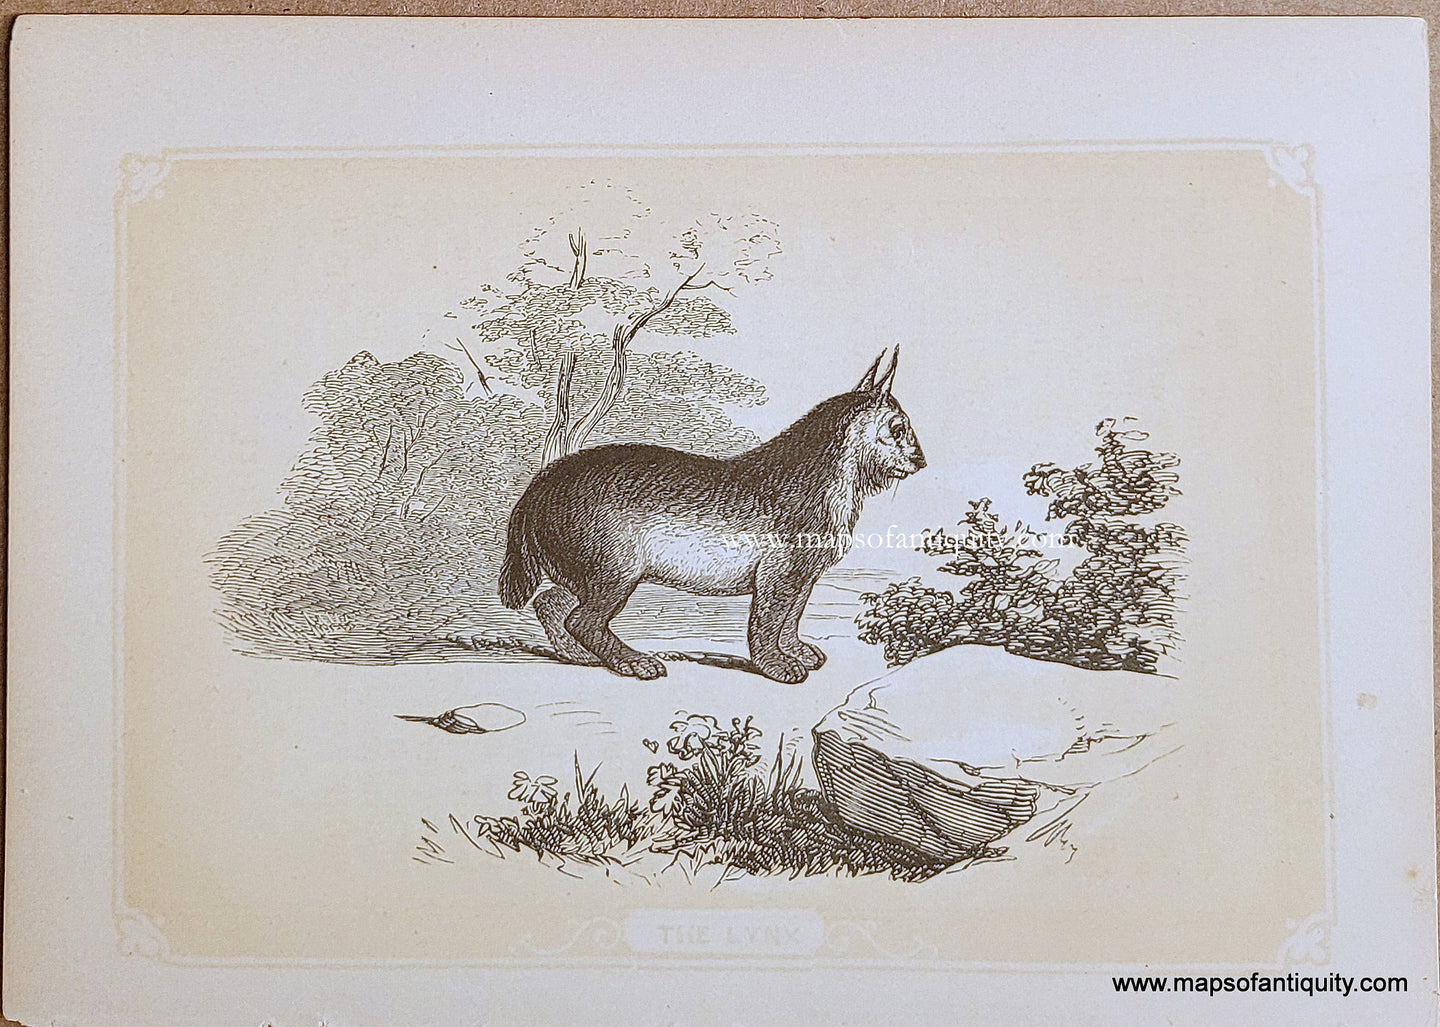 Genuine-Antique-Print-The-Lynx-1850s-Tallis-Maps-Of-Antiquity